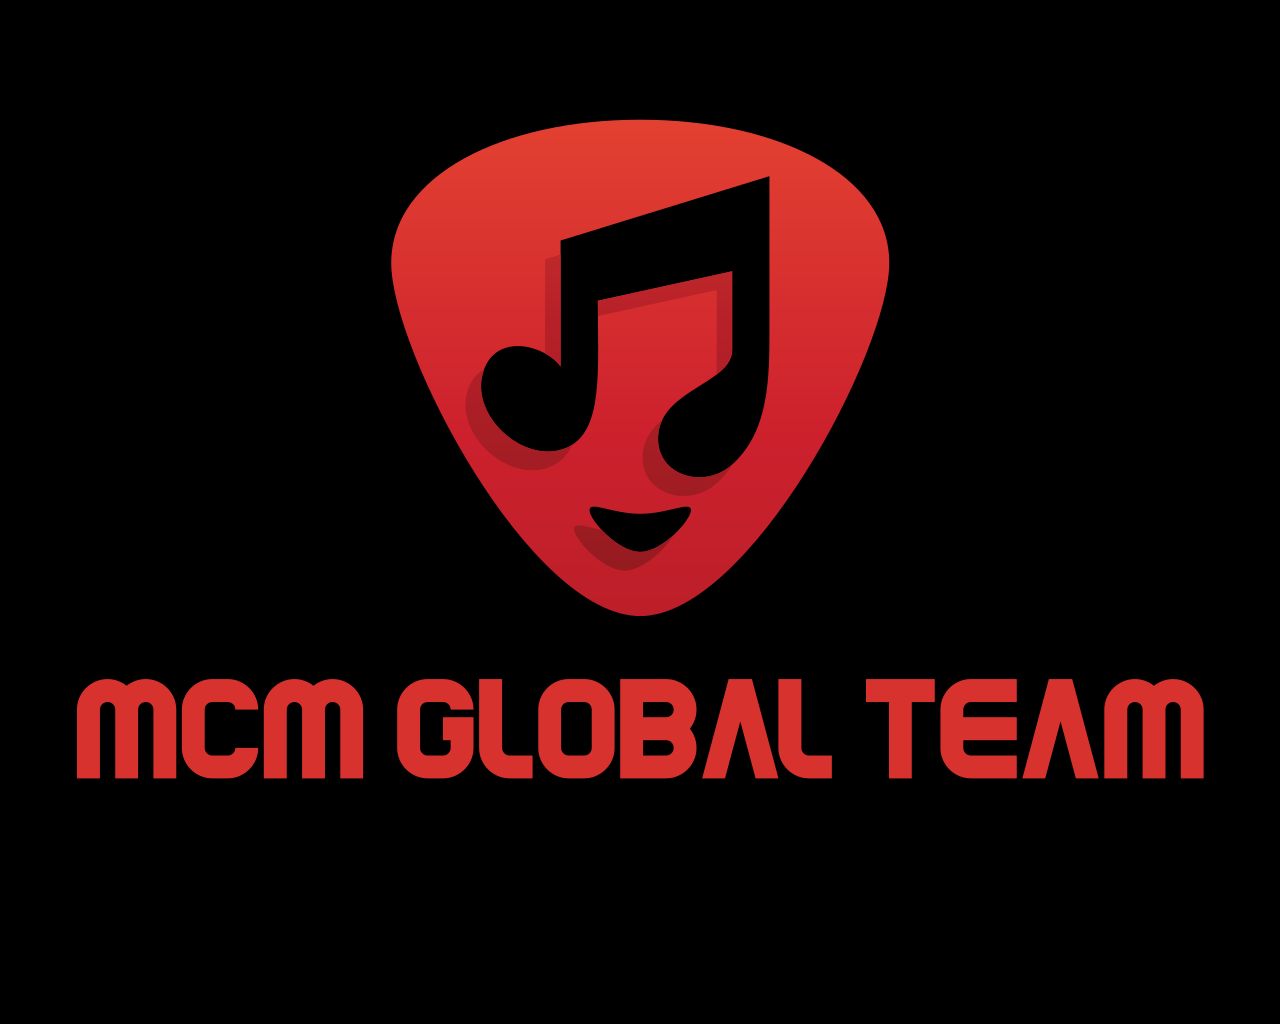 MCM Global Team